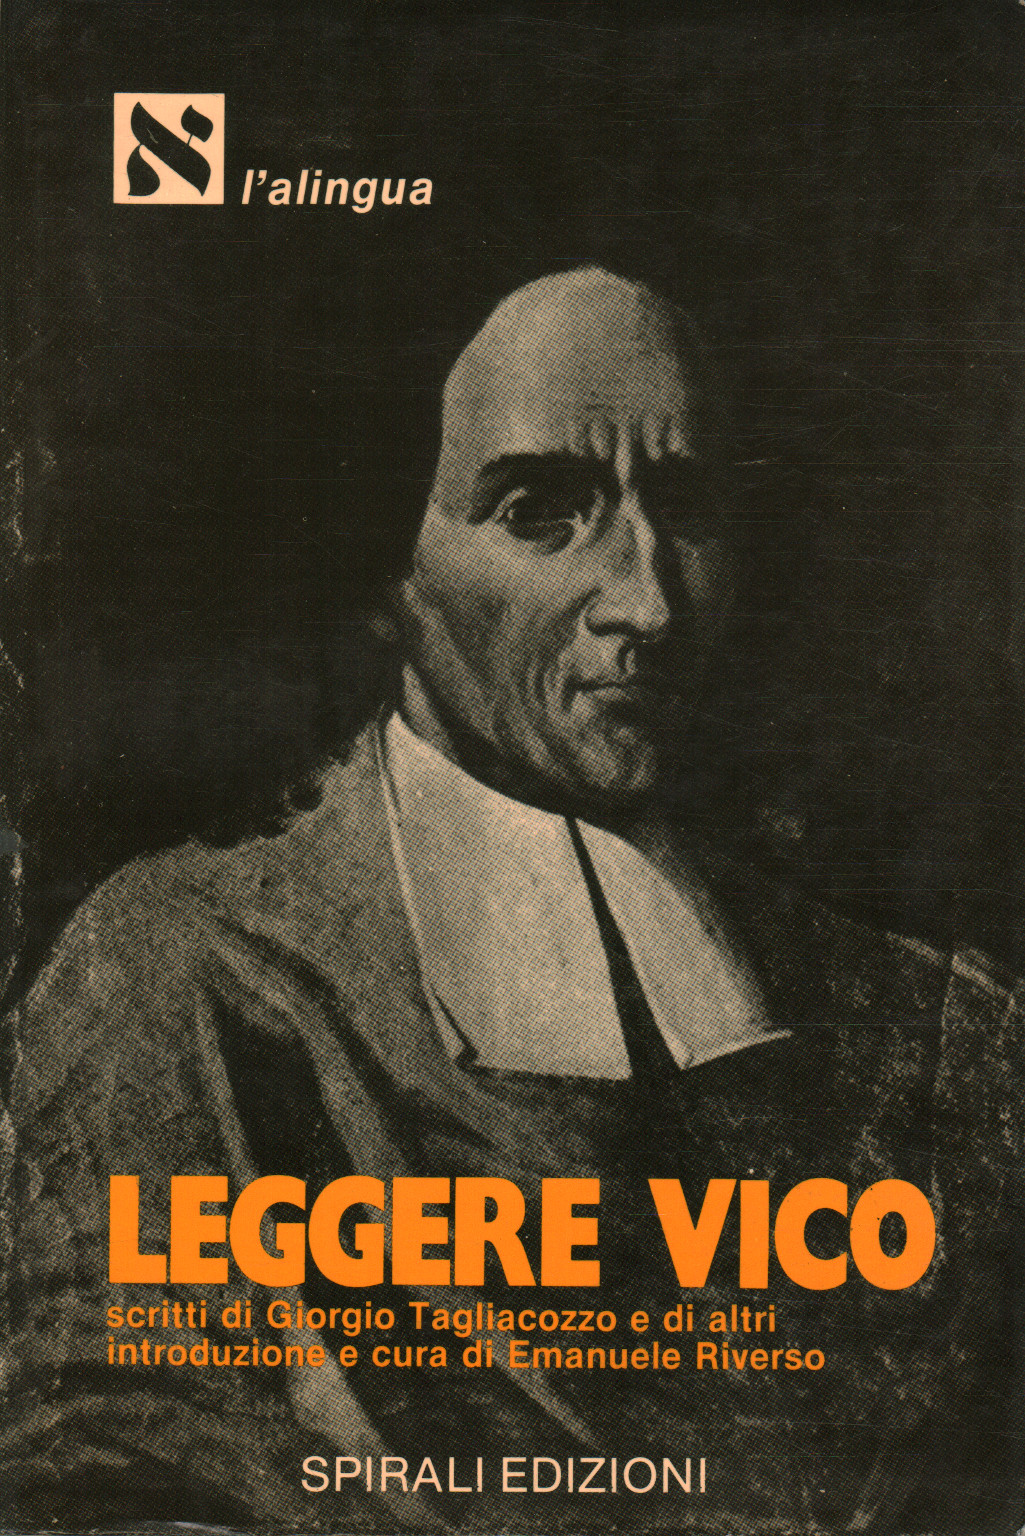 Lesen Sie Vico, Emanuele Riverso